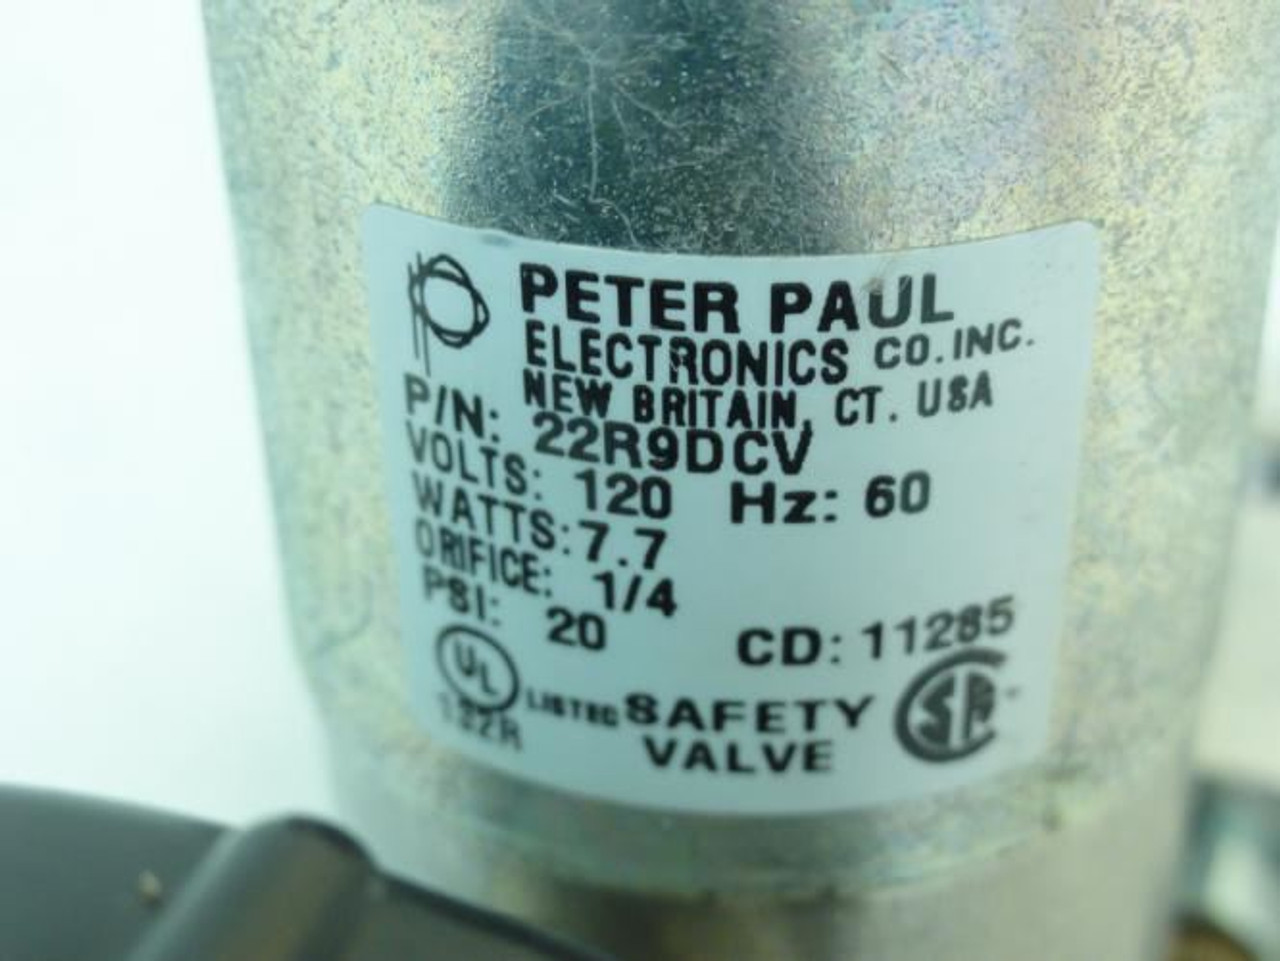 Peter Paul auto-22R9DCV; Automatic Lubrication Solenoid Valve; 120V